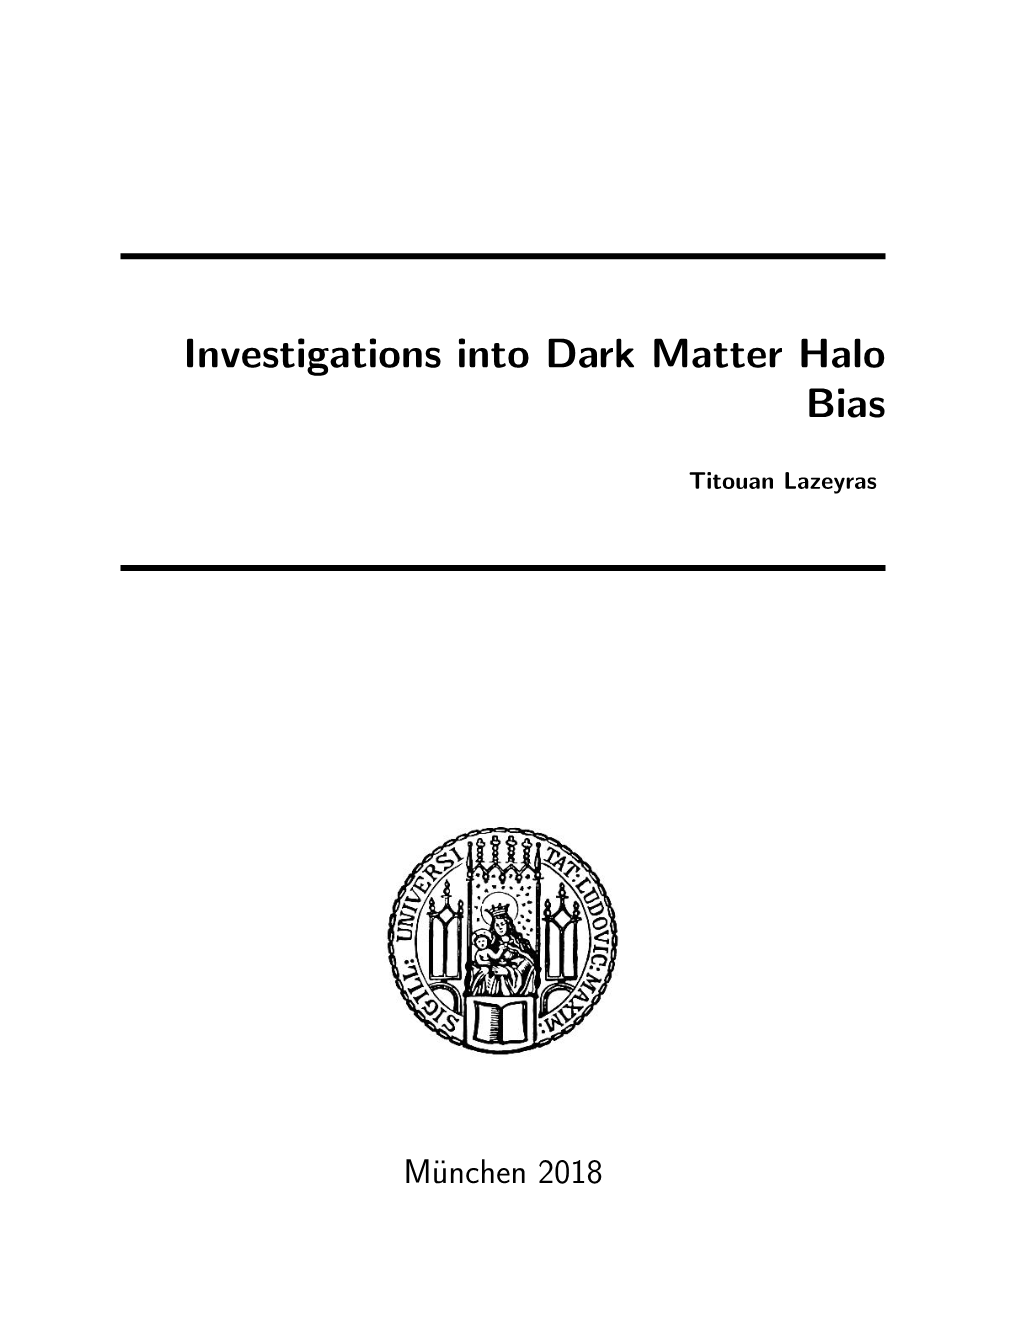 Investigations Into Dark Matter Halo Bias